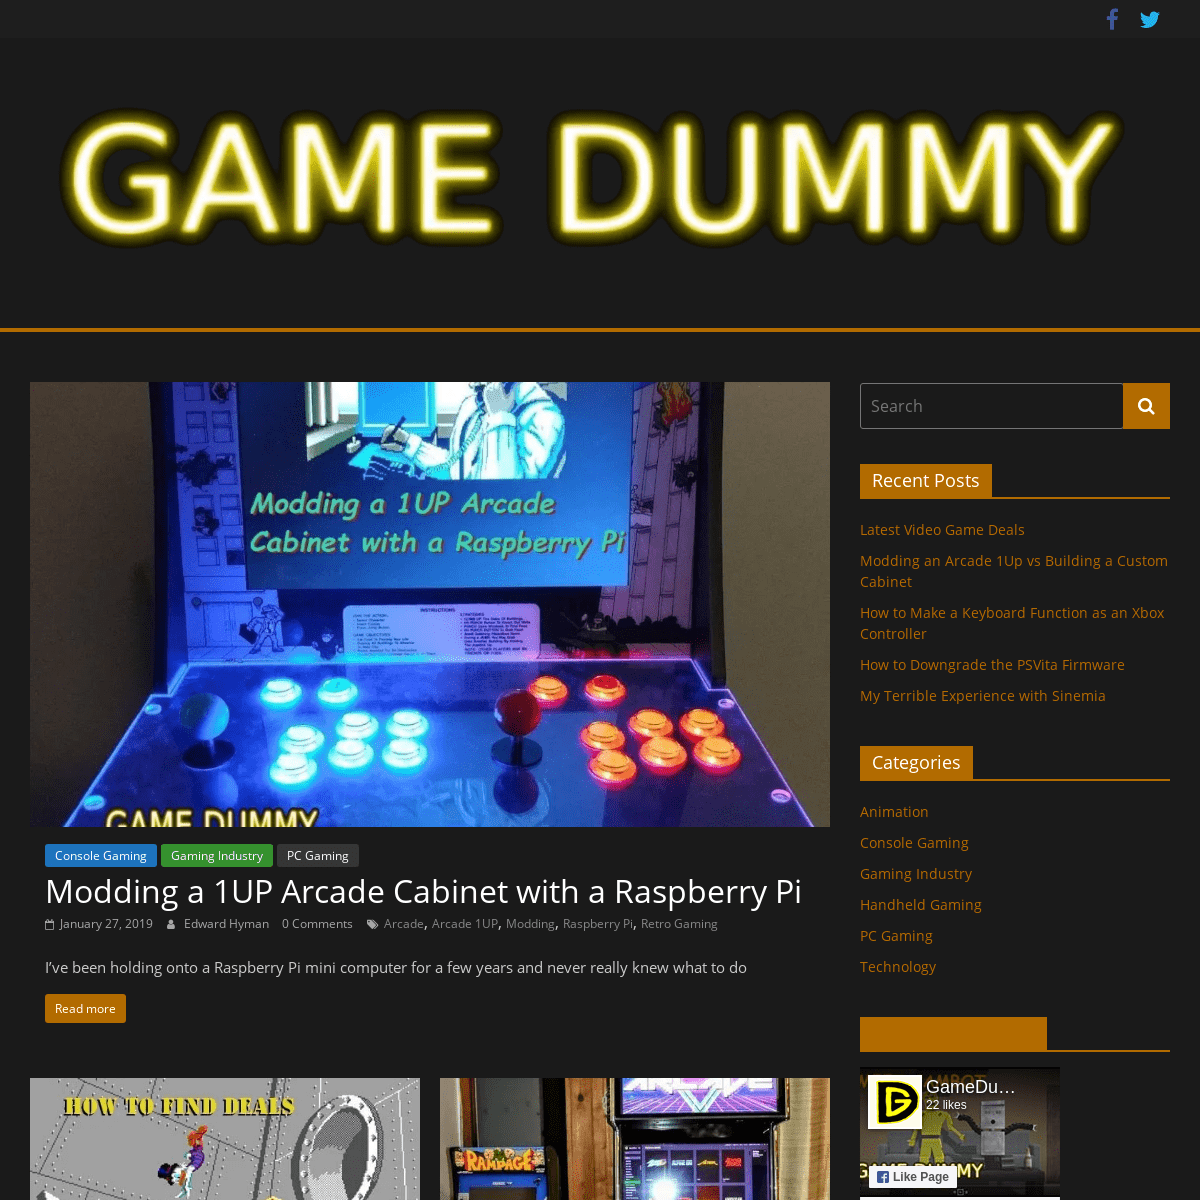 A complete backup of gamedummy.com